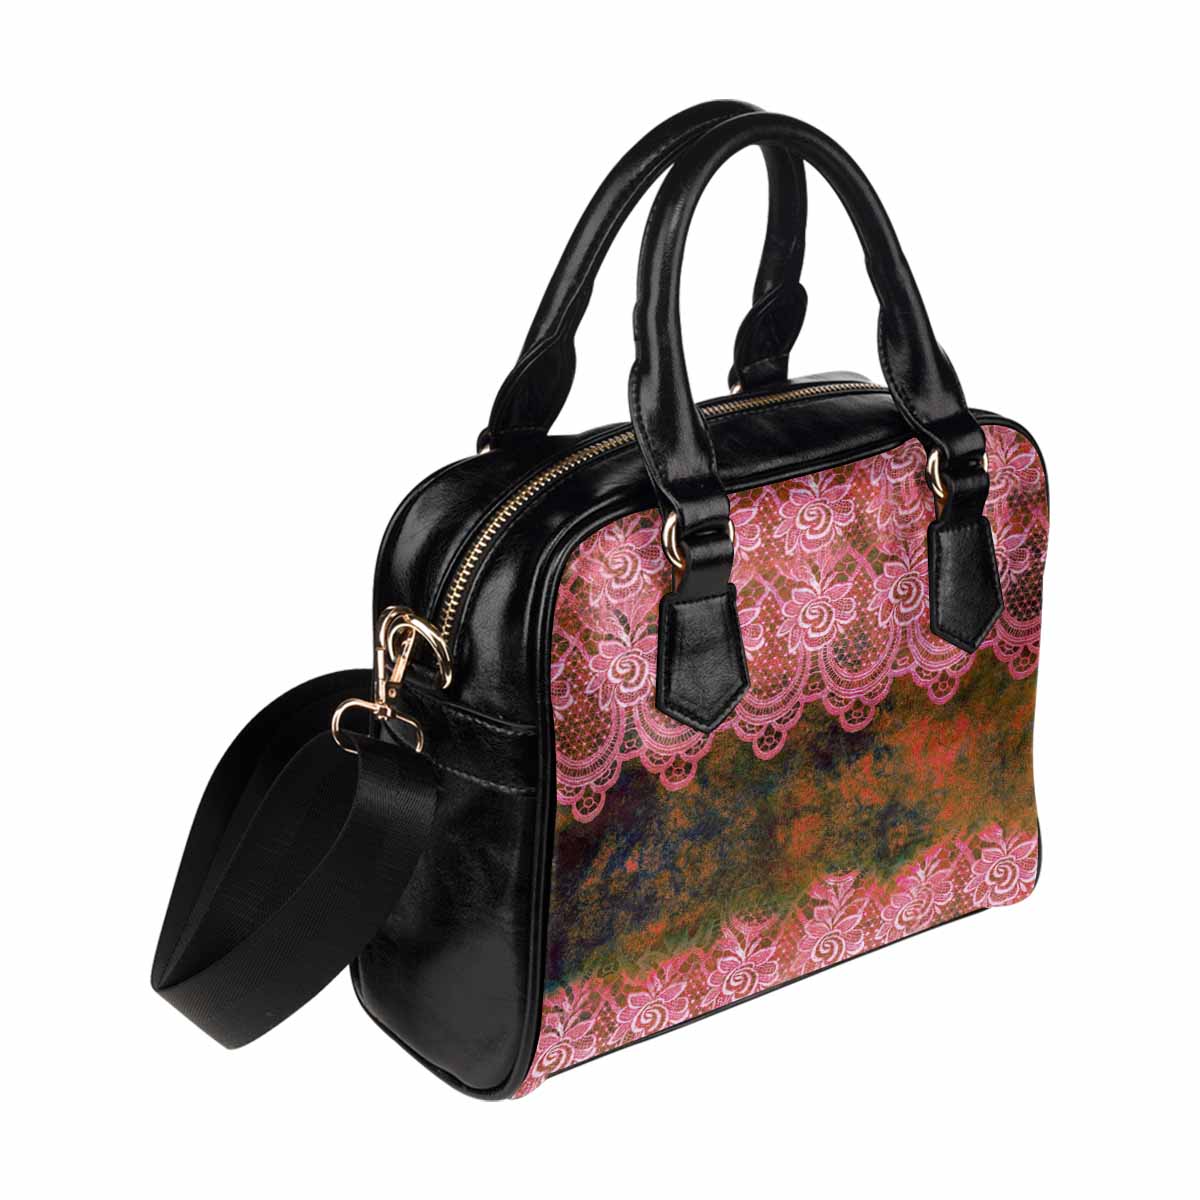 Victorian lace print, cute handbag, Mod 19163453, design 32